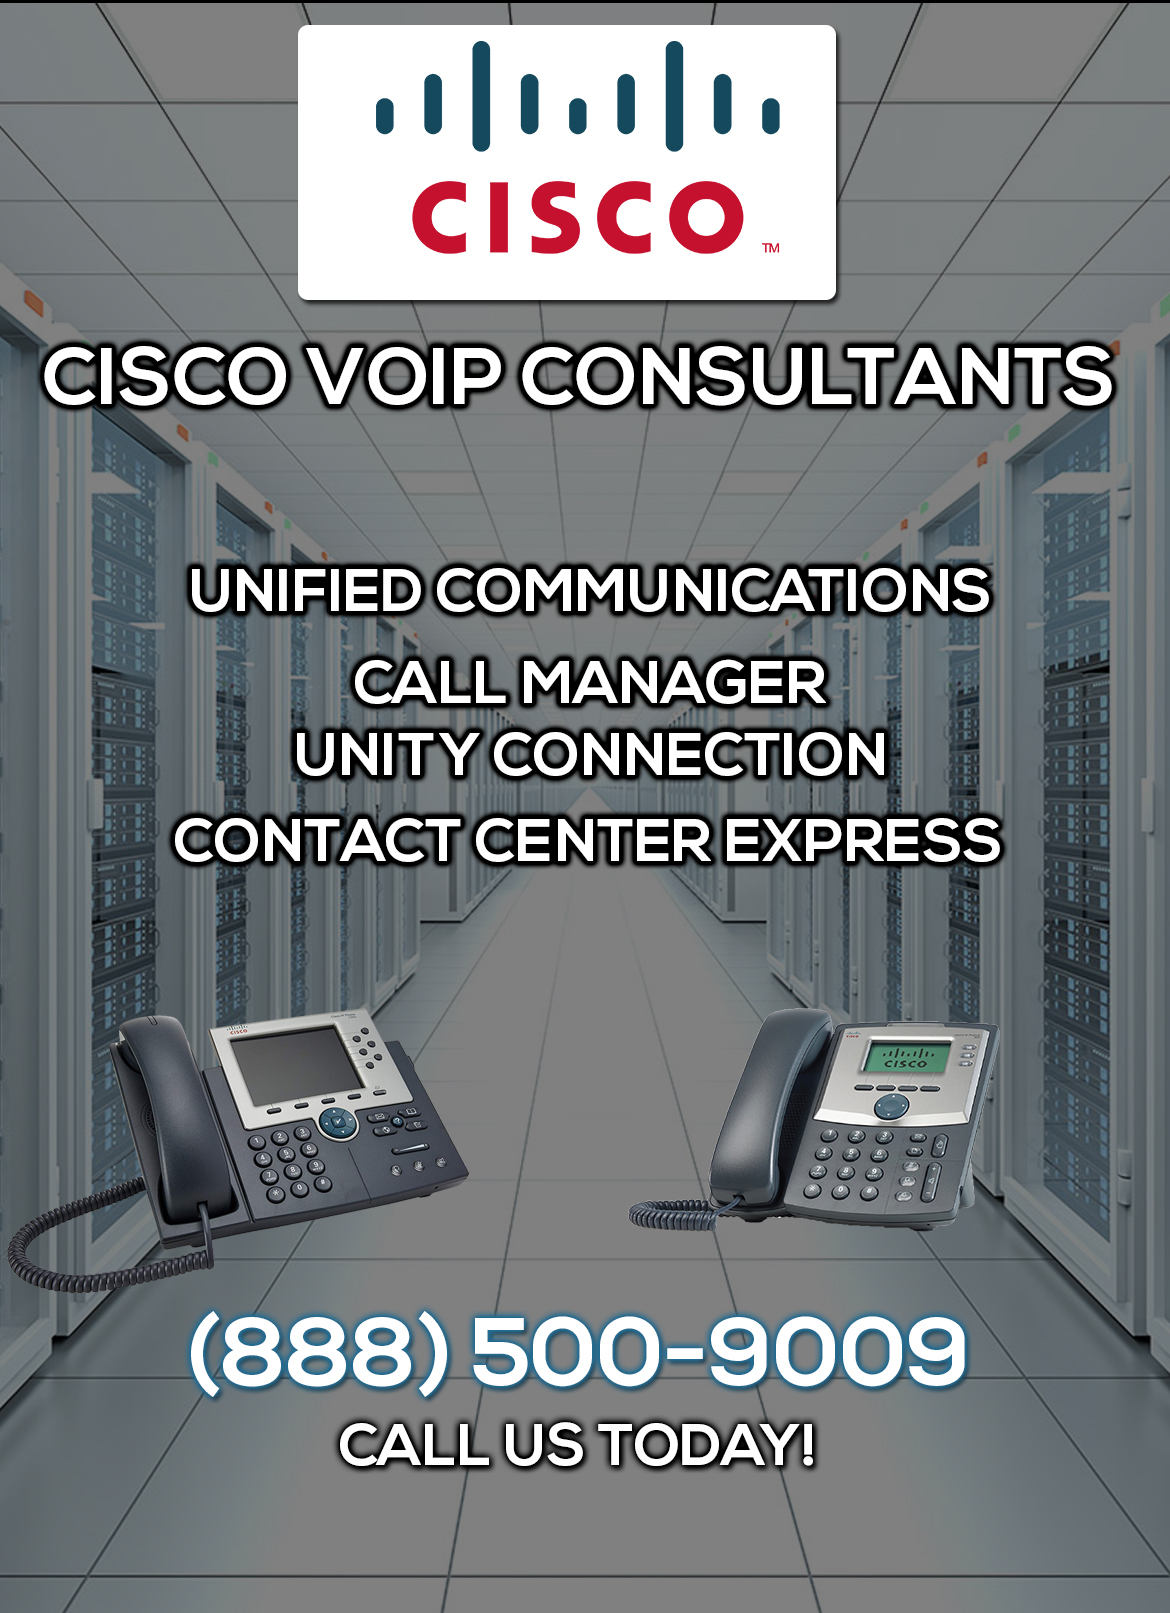 Cisco VoIP Consultants Newport Beach